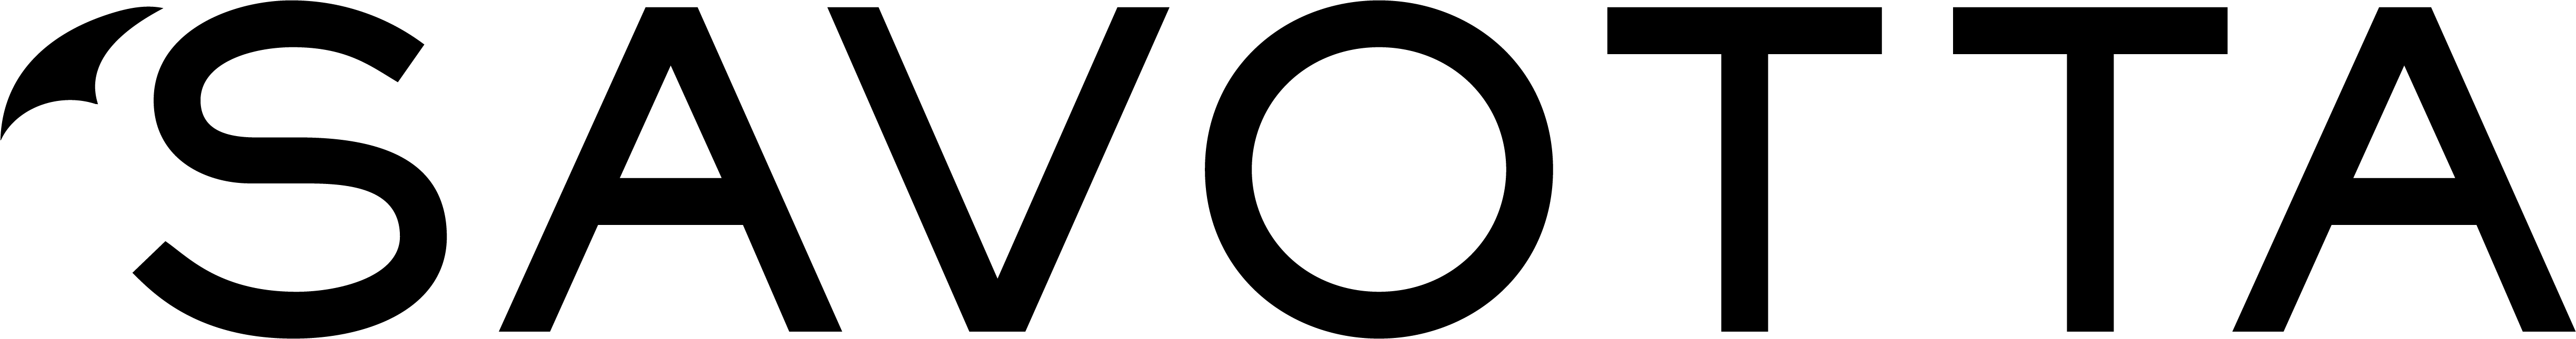 Savotta-logo-black-CMYK